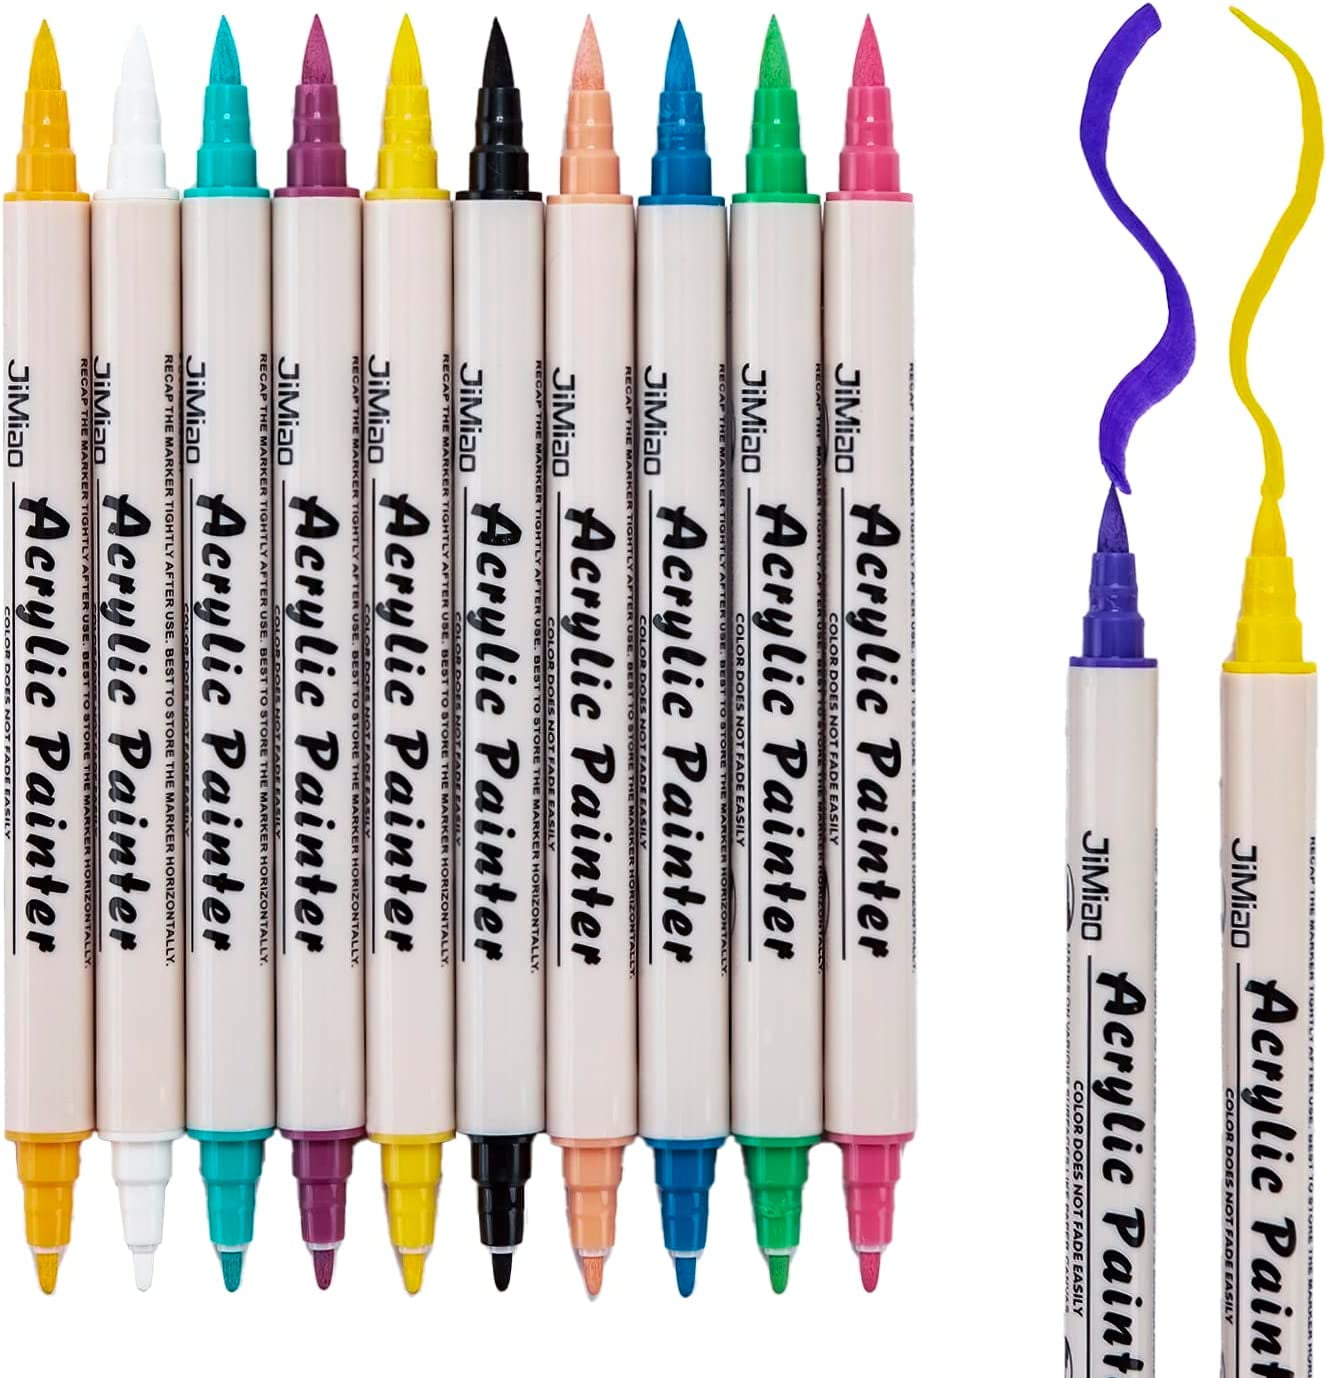 12 Colour Acrylic Paint Pens (Fine Tip) for rock painting, shoes, ceramic,  glass - Life of Colour